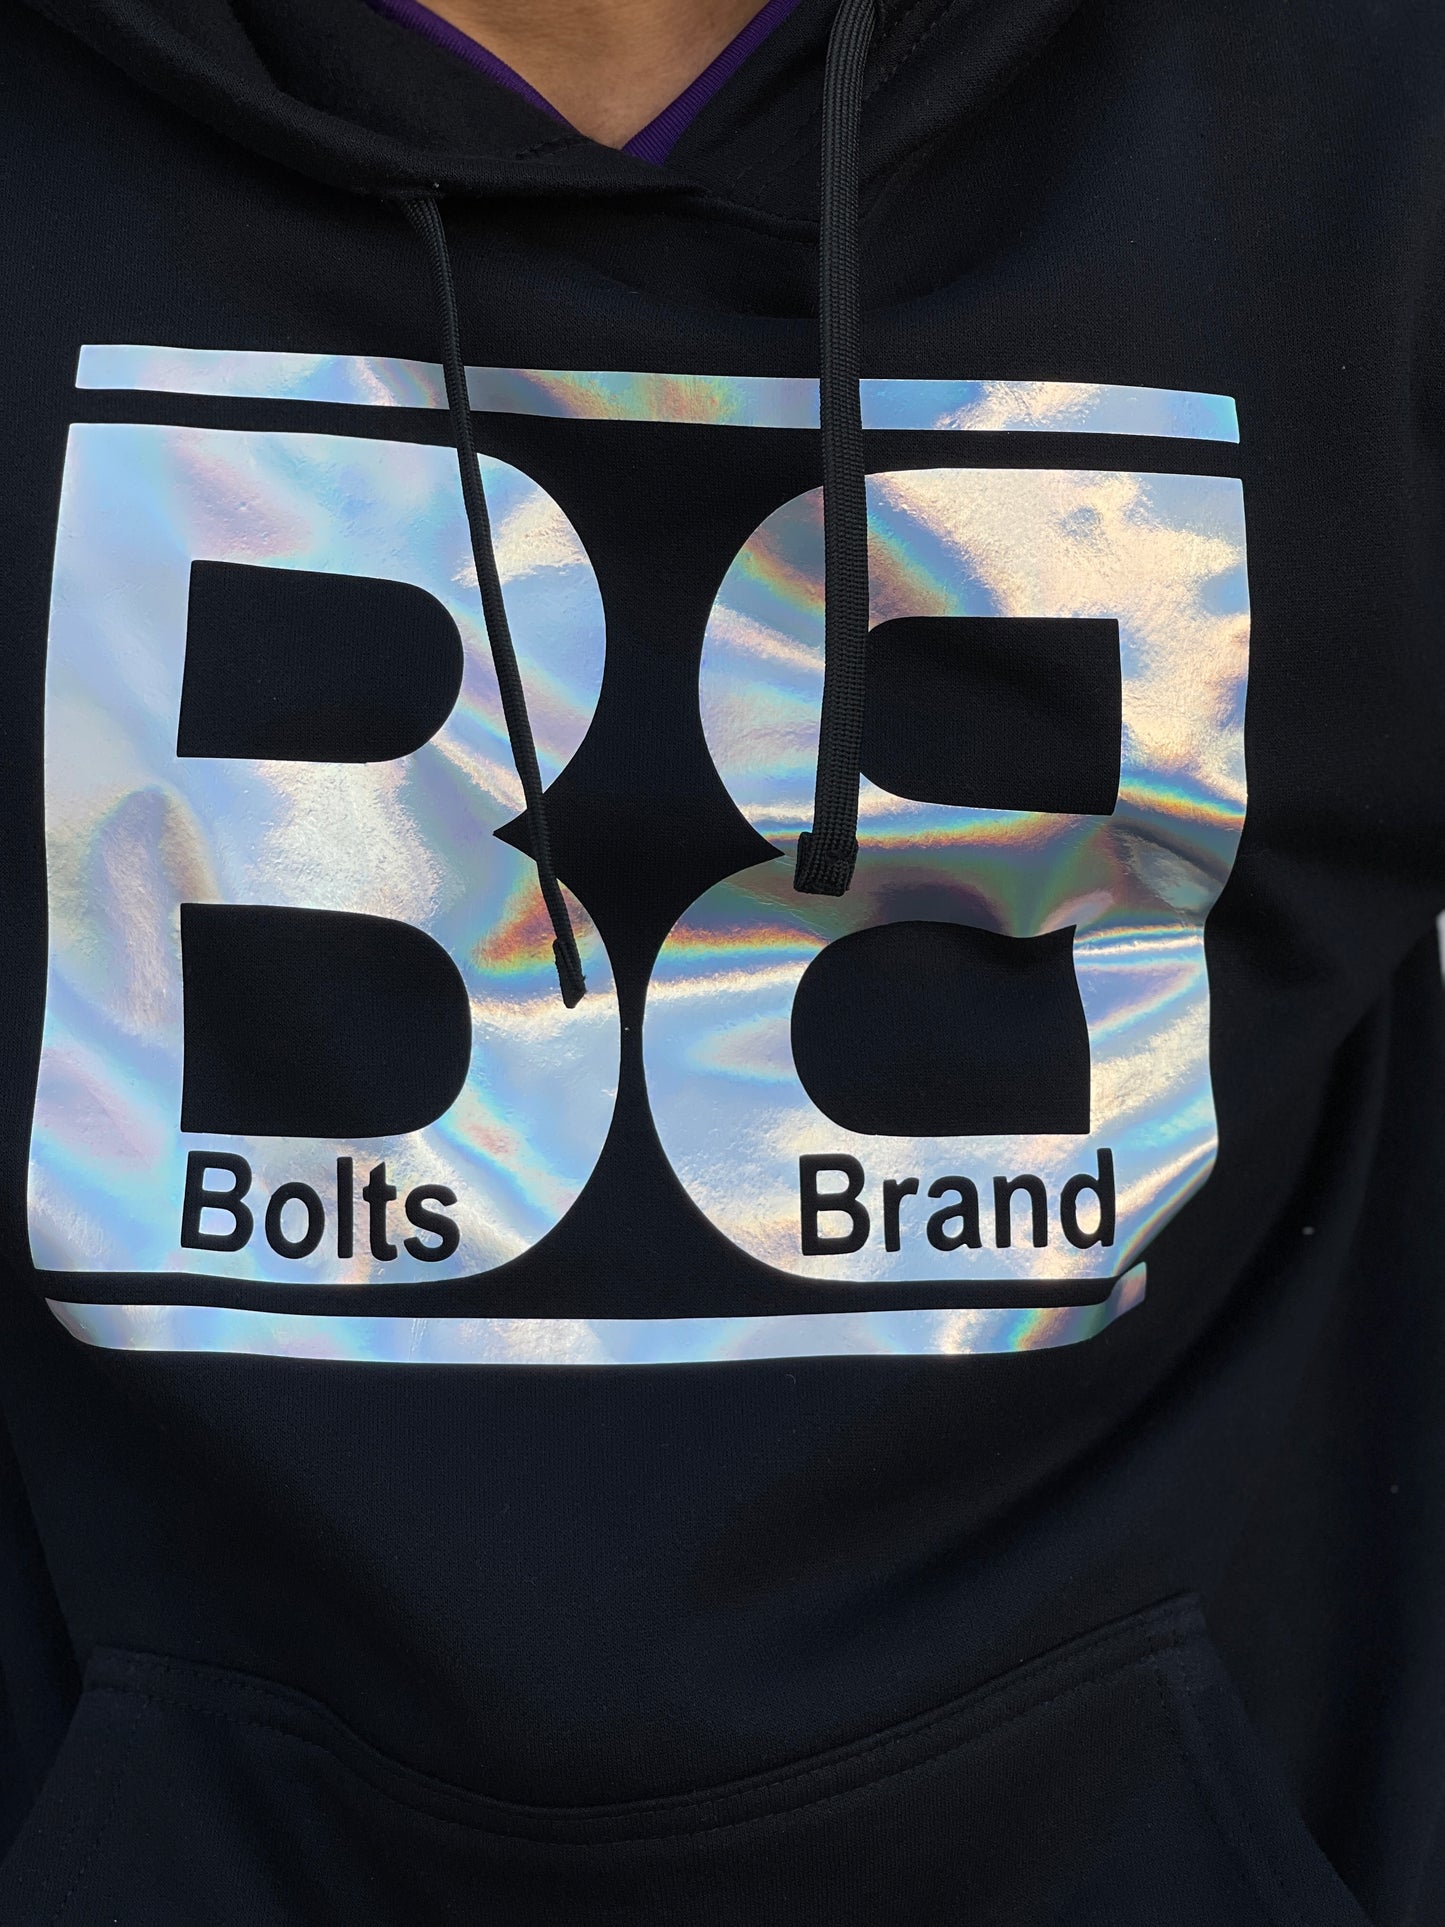 B le chrome sweatshirt ( bolts brand )